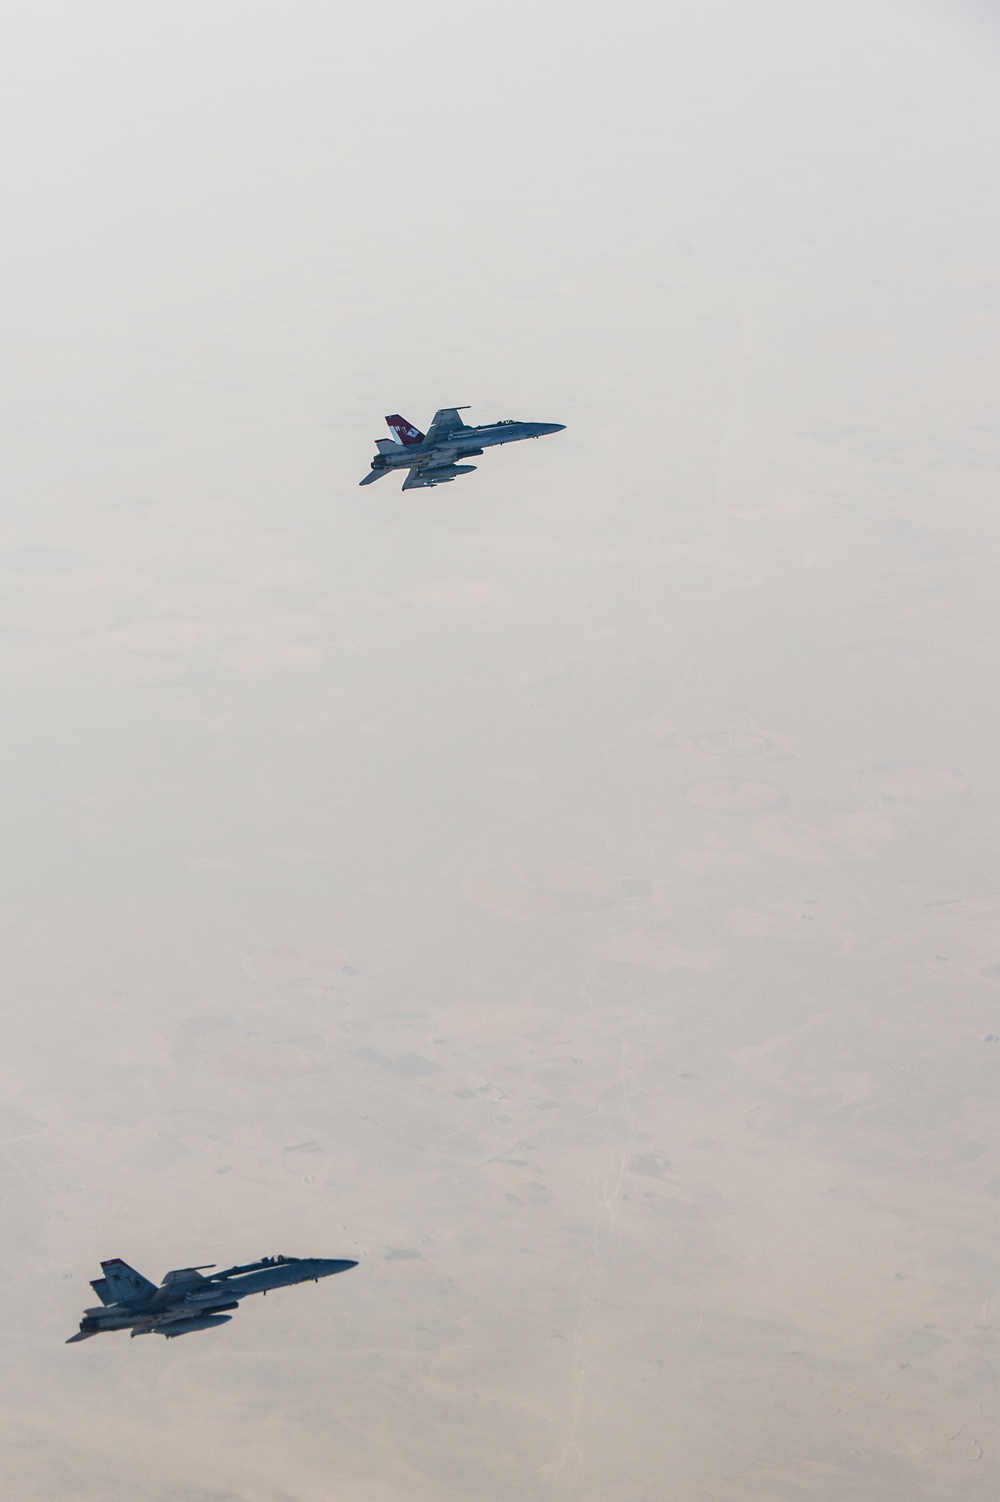 U.S. Marines refuel during combat missions over Iraq